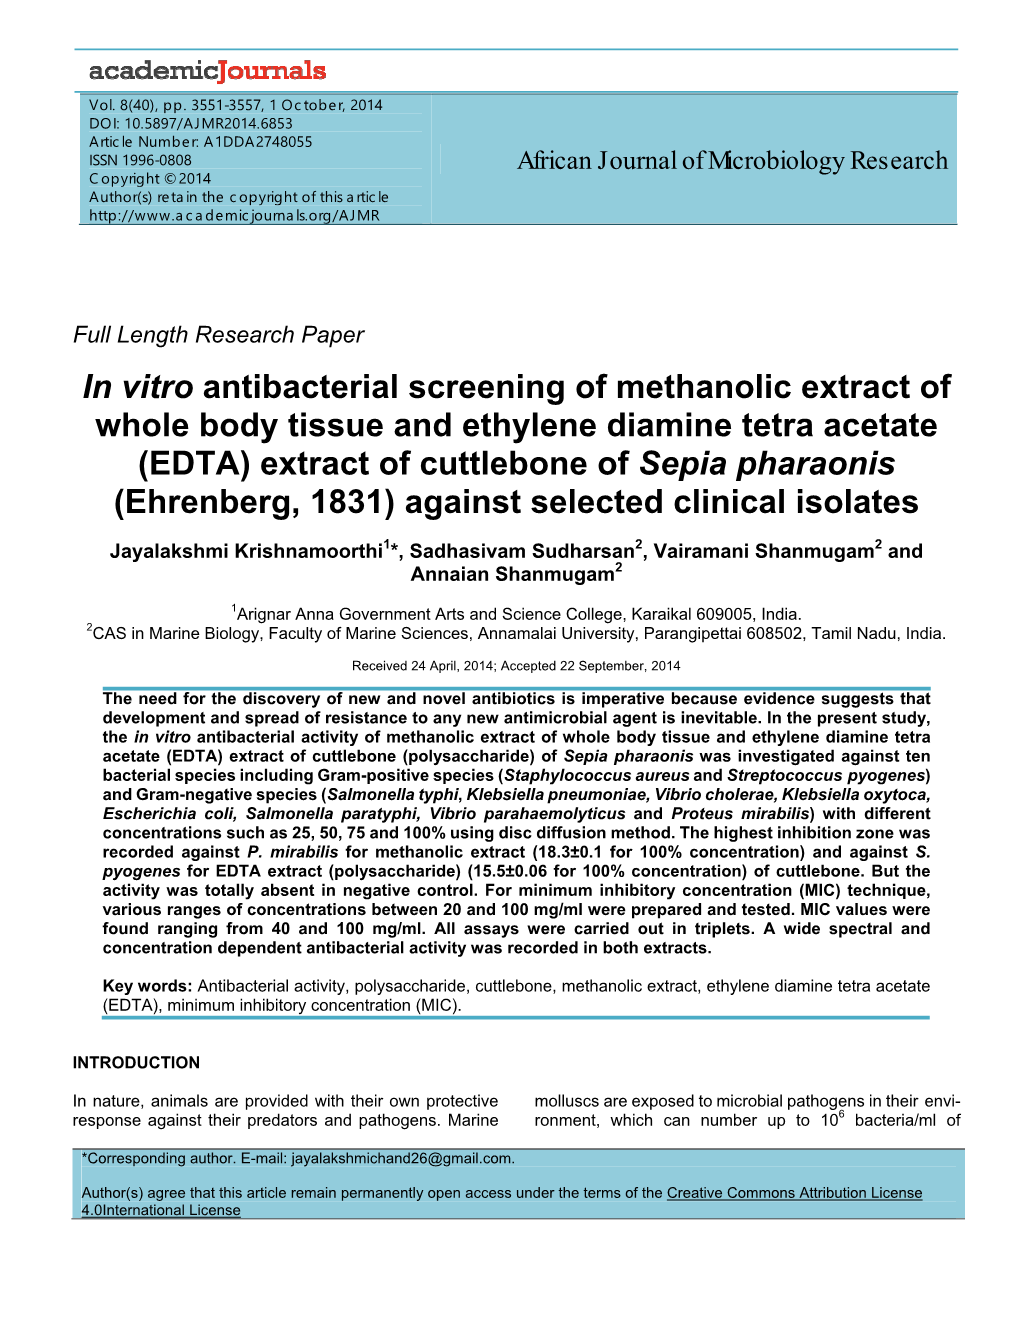 In Vitro Antibacterial Screening of Methanolic